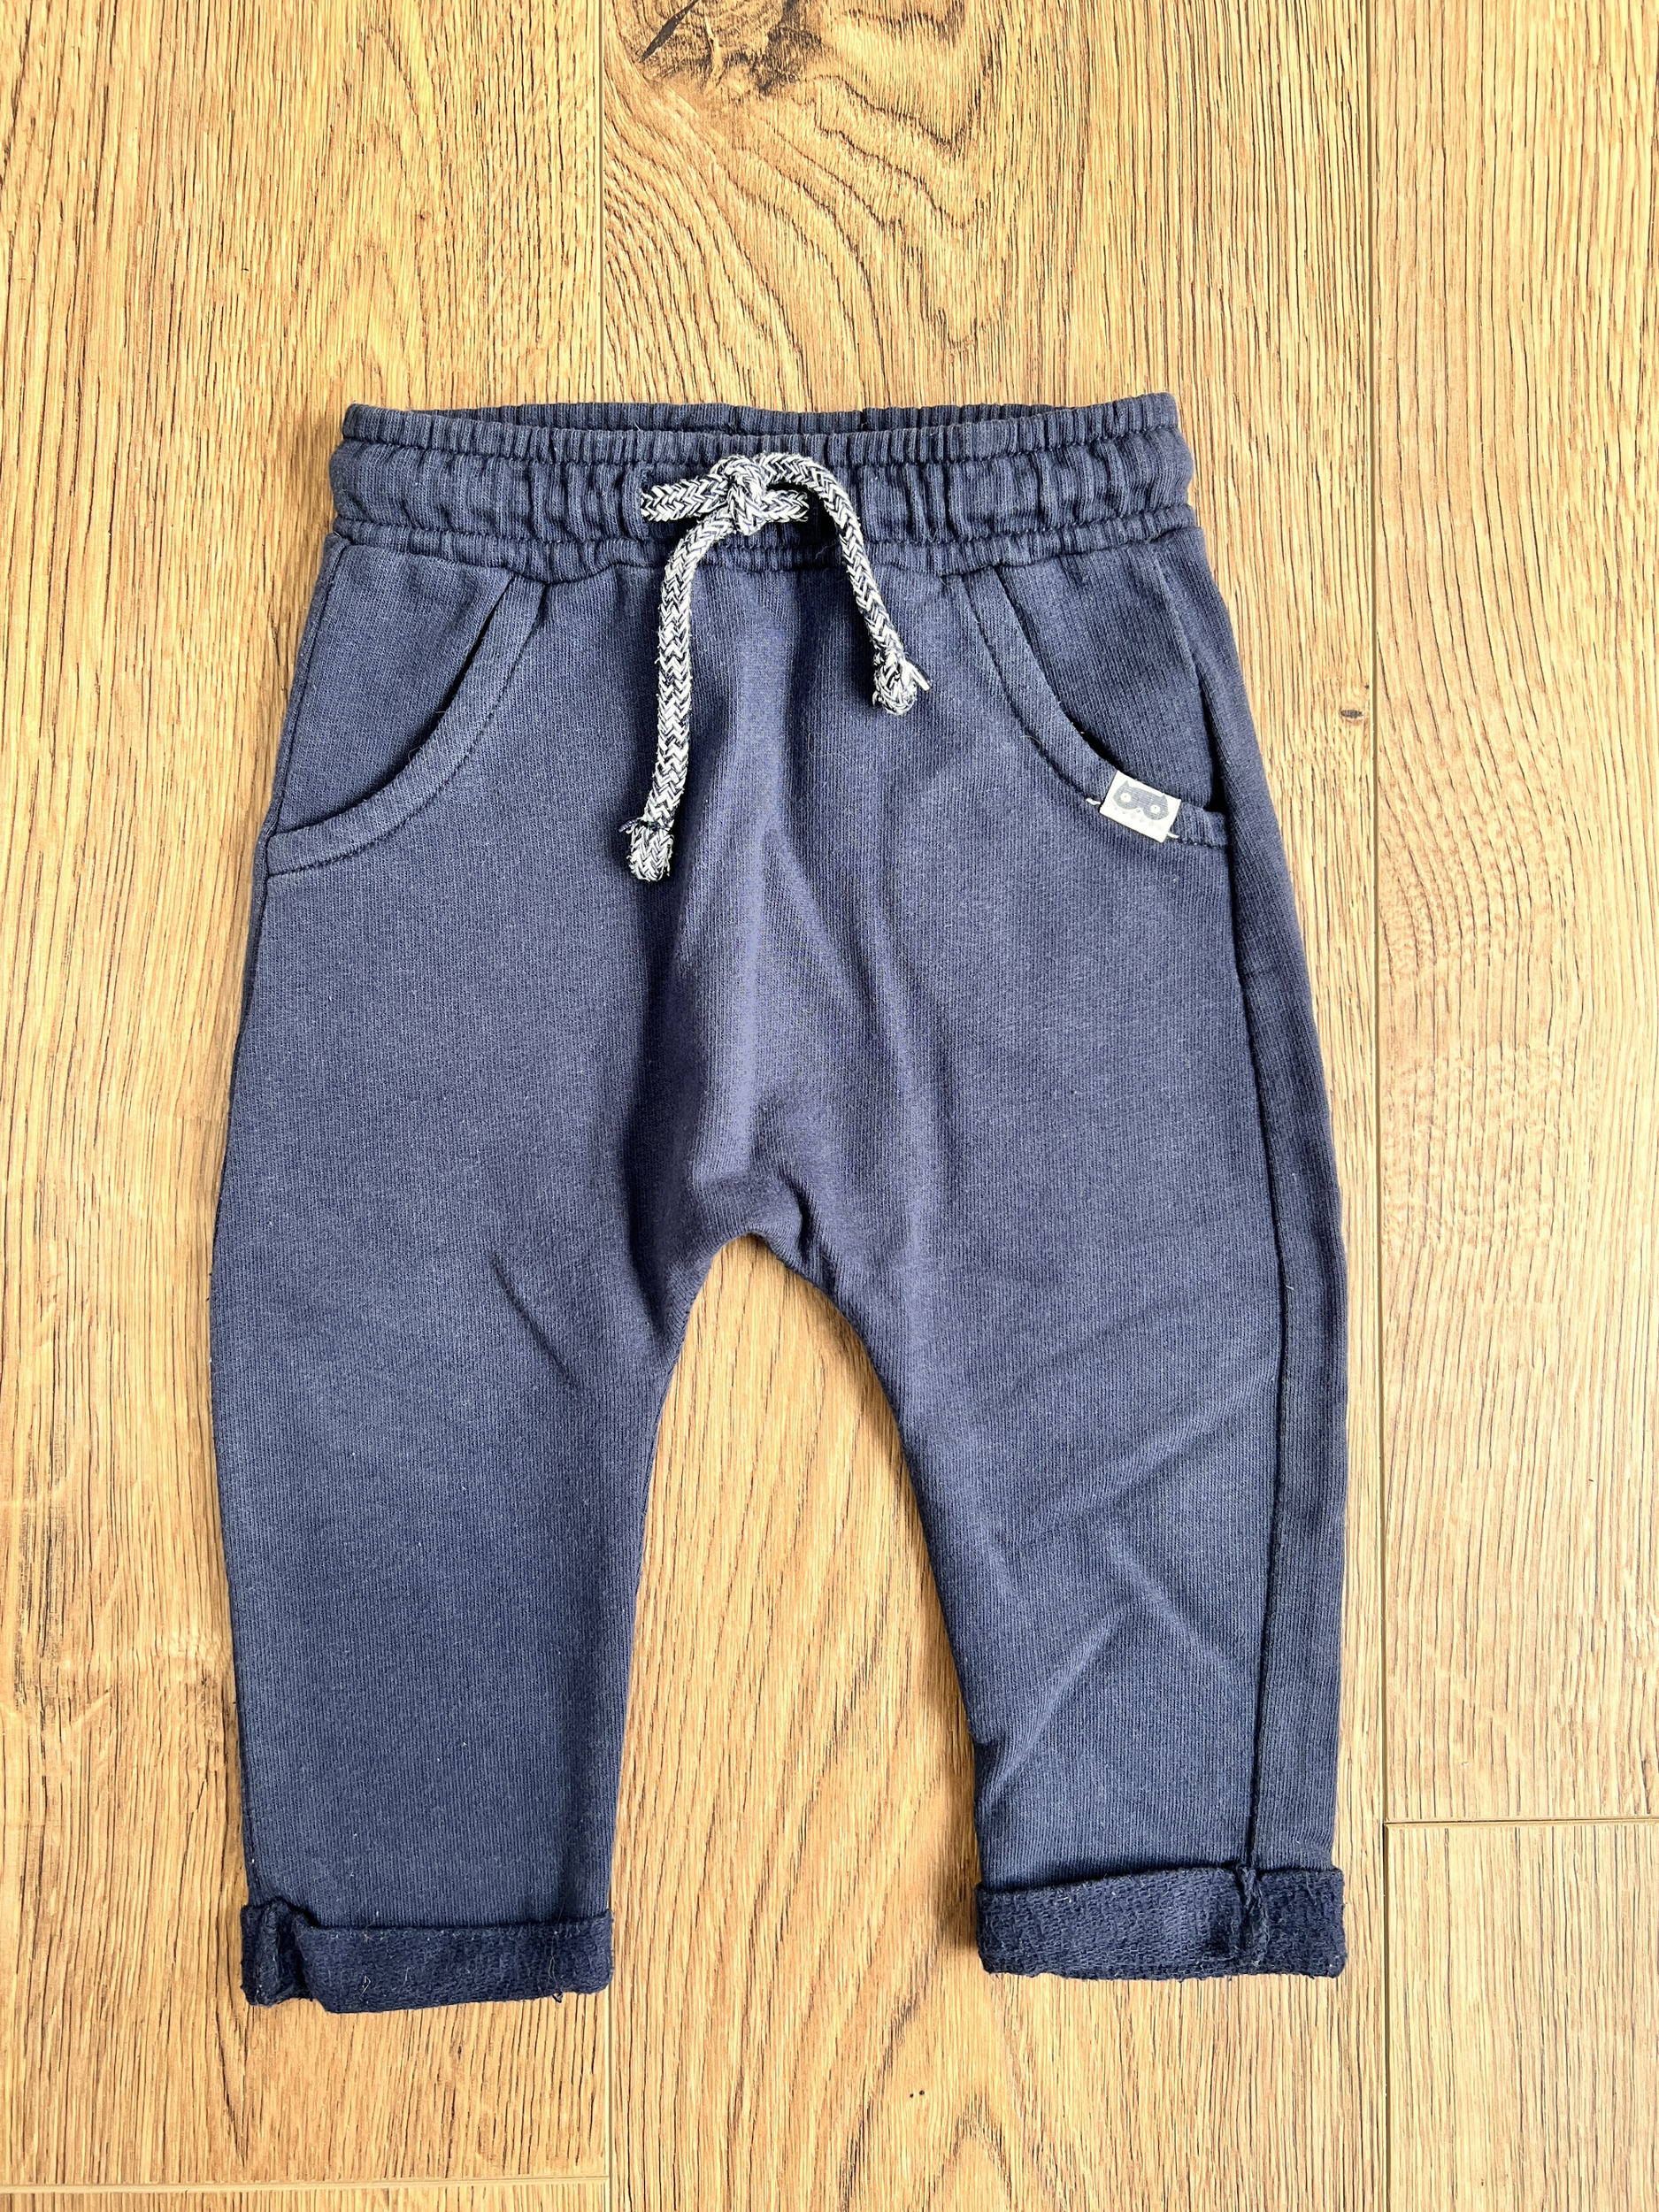 Pantalon jogging bleu marine bébé garçon - Tape à l\'Oeil TAO - 12 mois 1 an